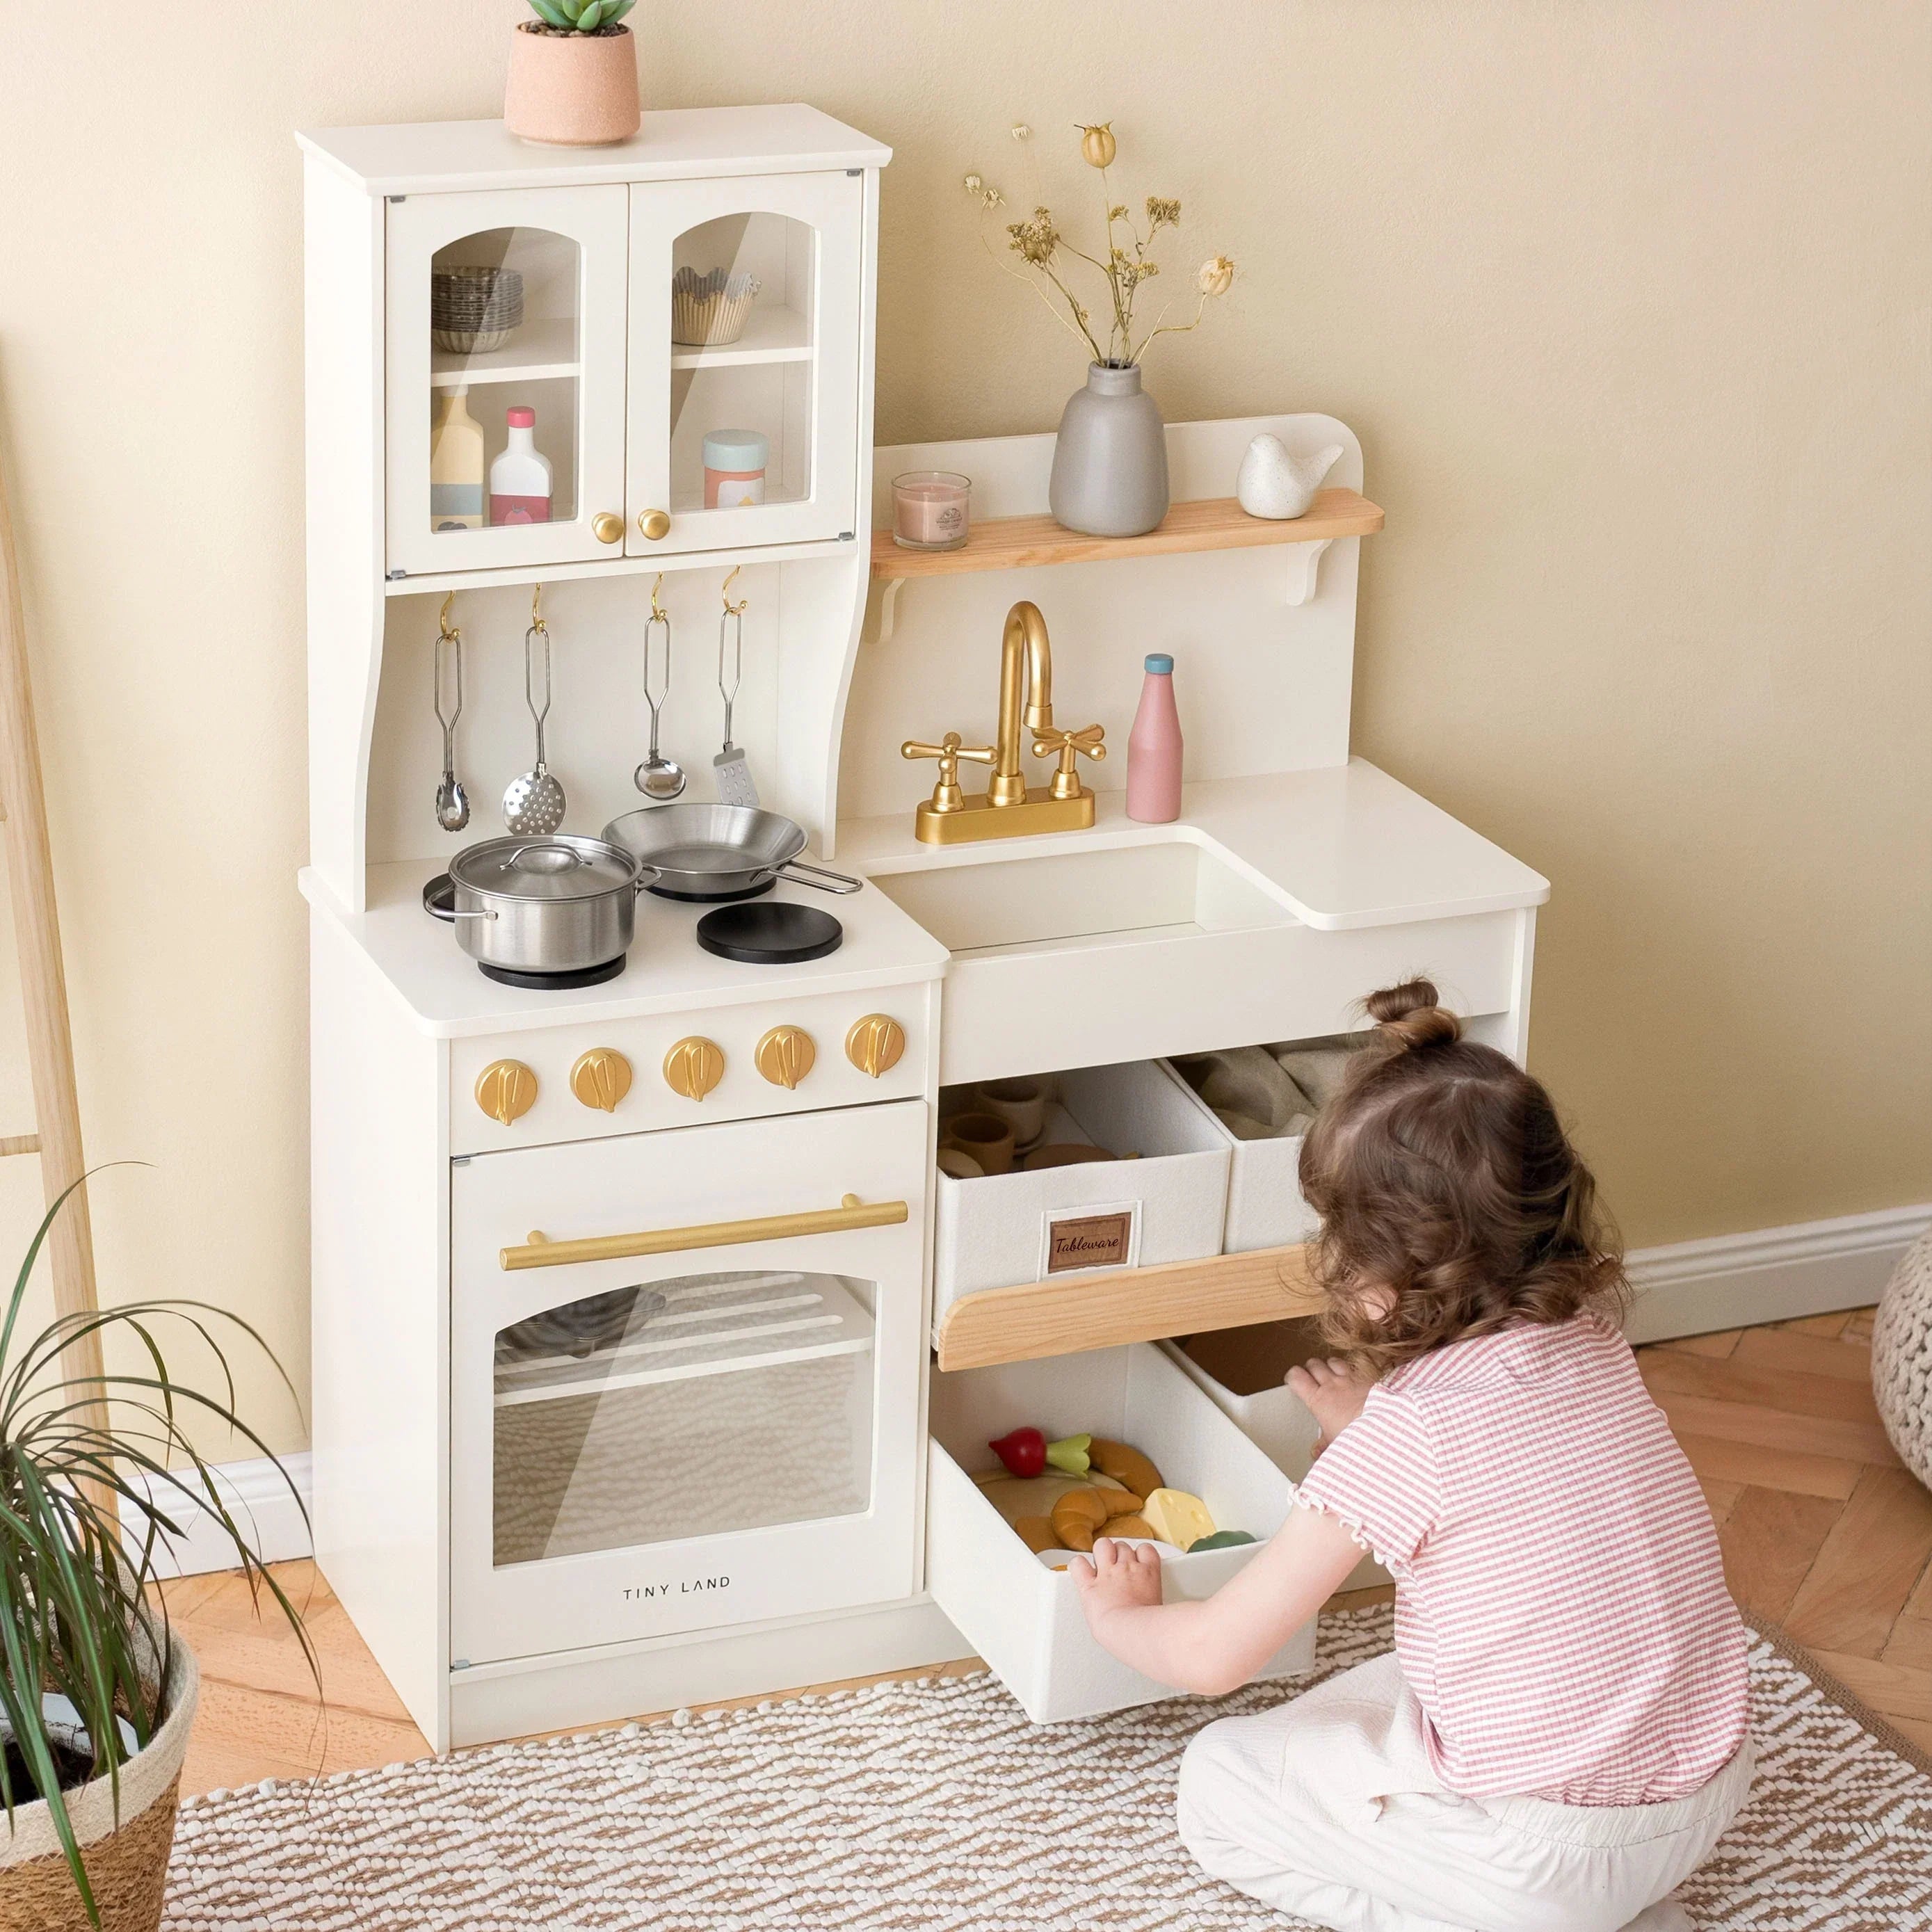 Tiny Land Trendy Play Kitchen - Montessori Organizer's Paradise